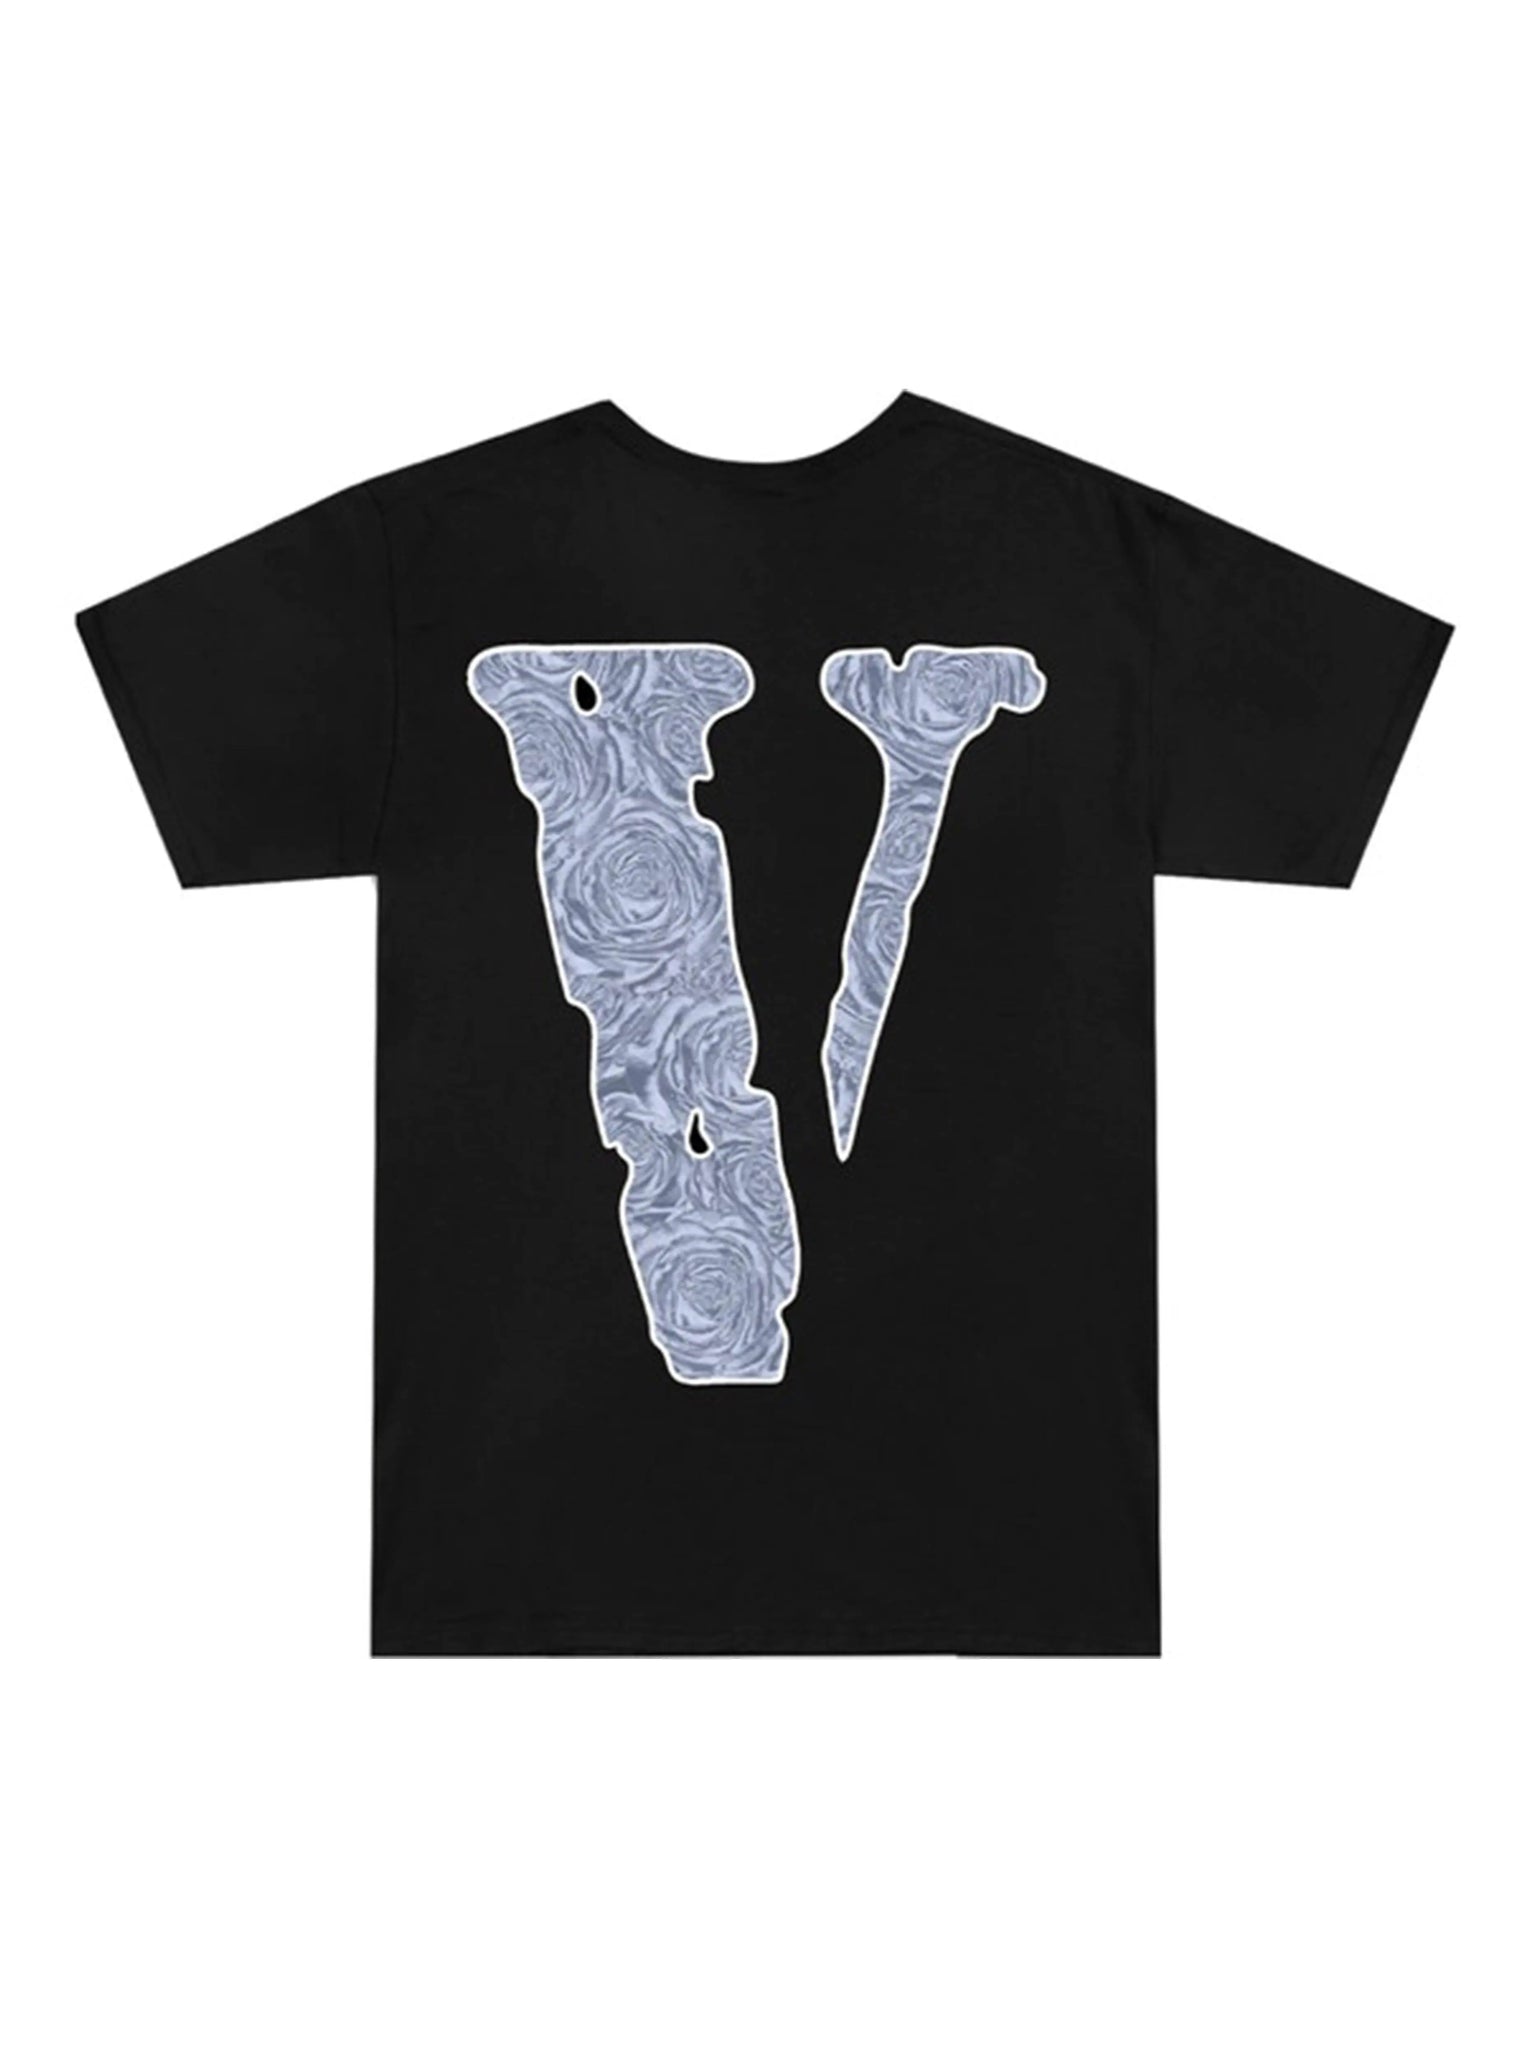 Pop Smoke x Vlone The Woo T-Shirt Black [SS20] Vlone